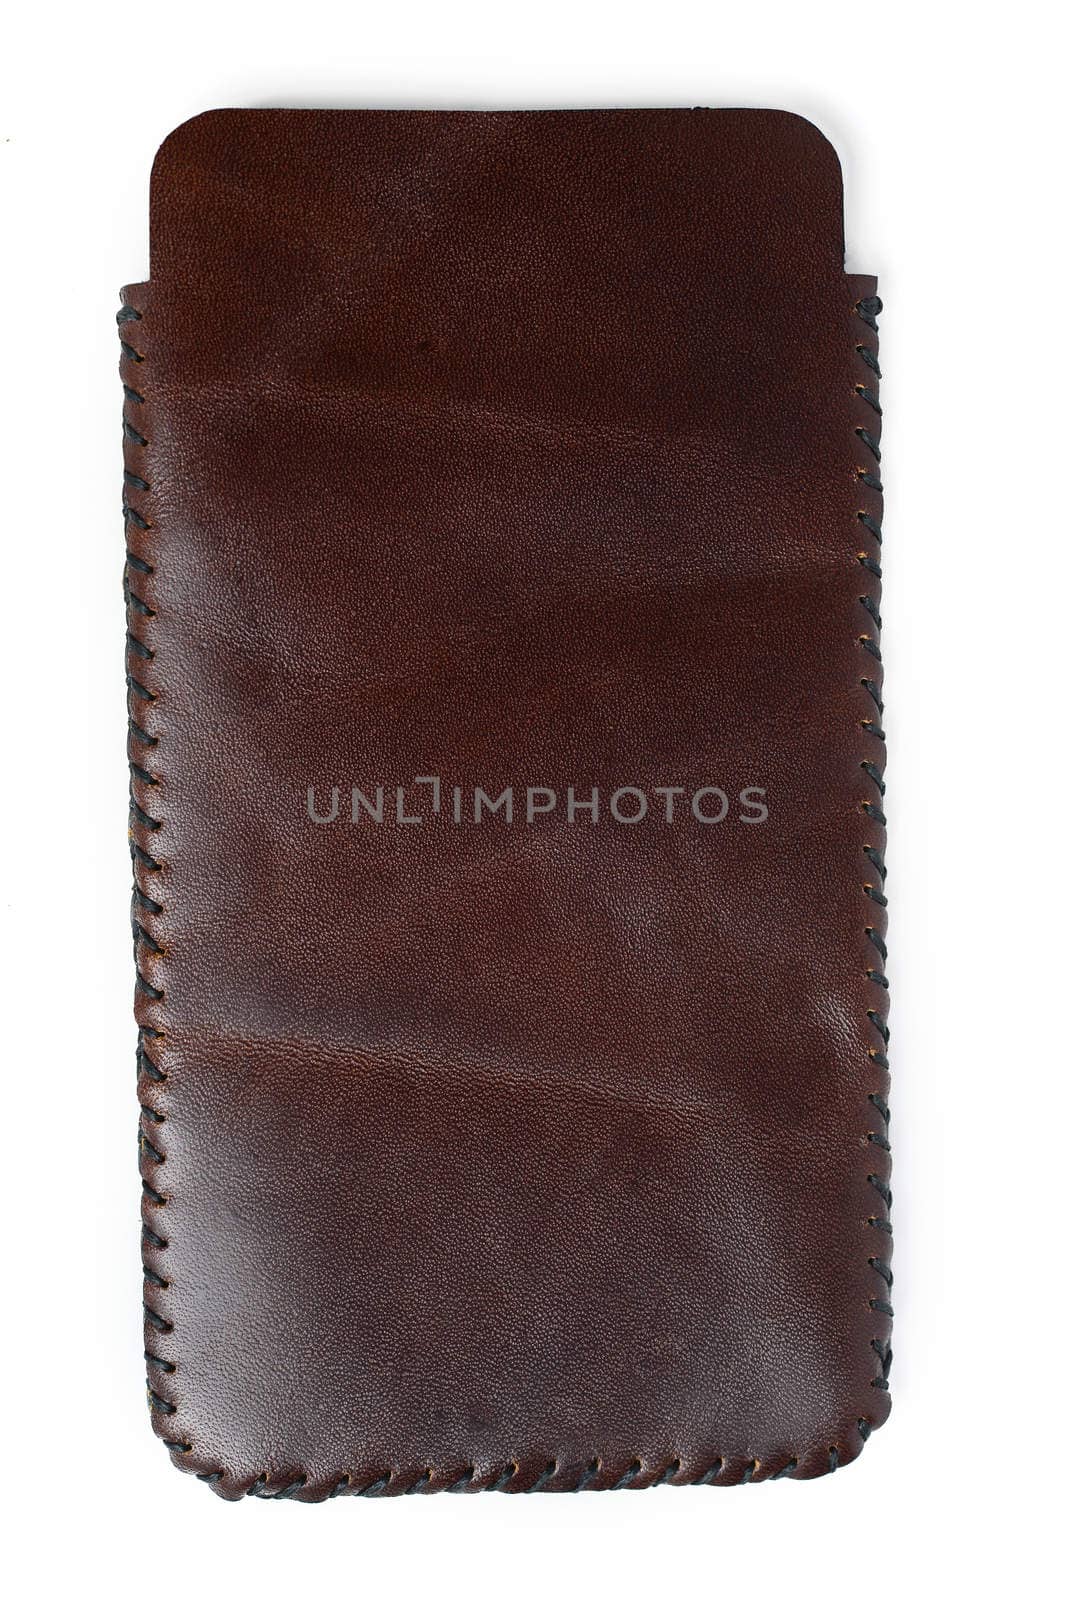 mobile leather case by antpkr